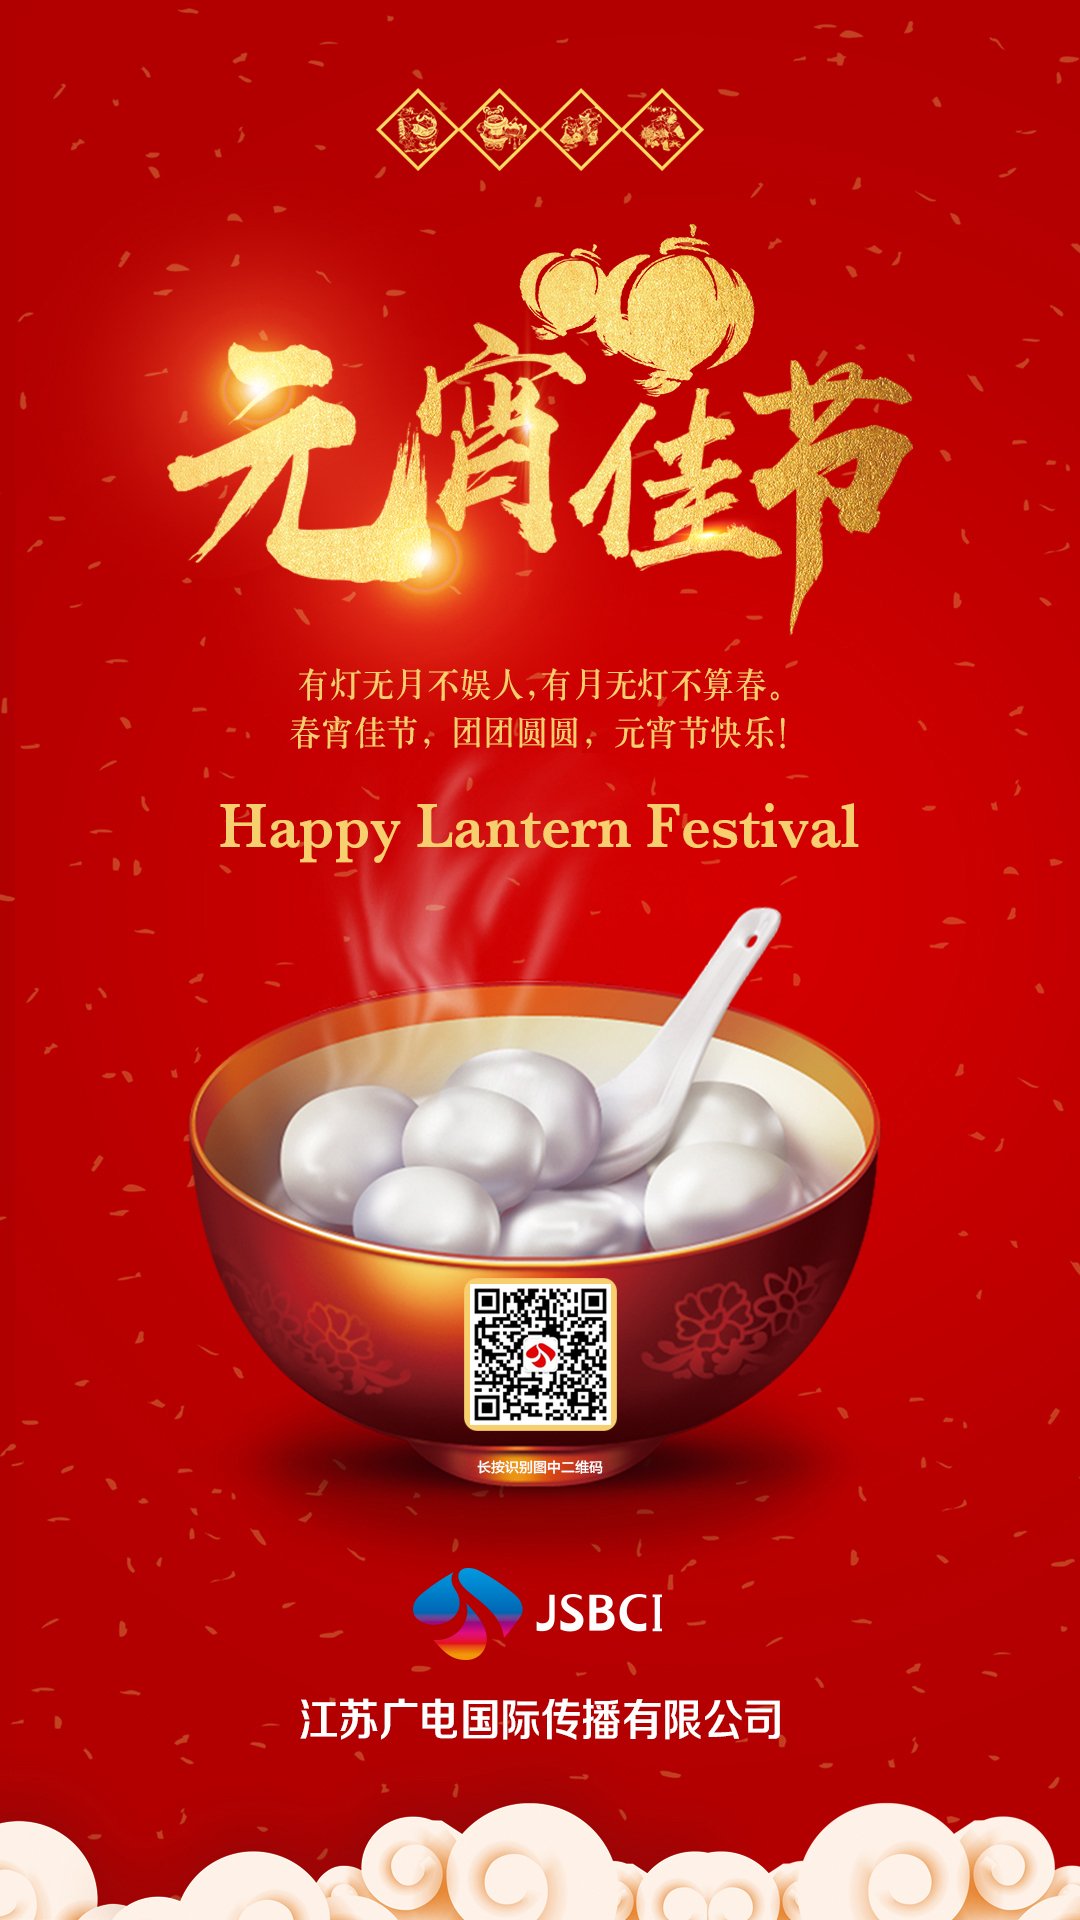 Jsbci江苏广电国际on Twitter 元宵节快乐 Happy Lanternfestival T Co Mpcjjkgghy Twitter